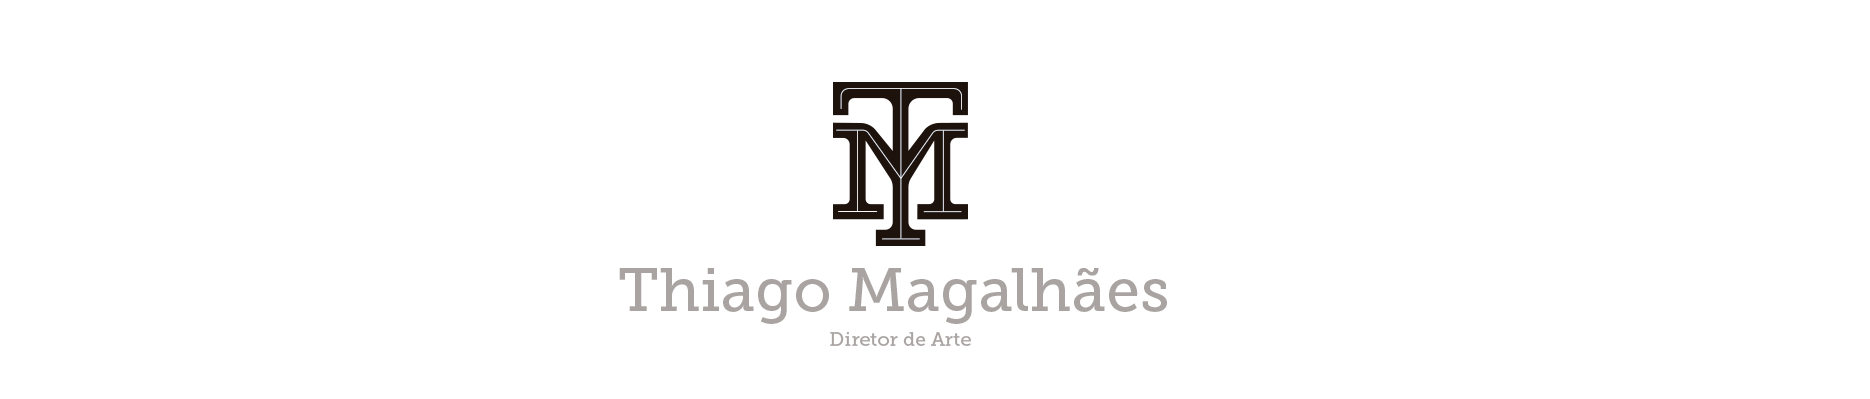 Thiago Magalhães